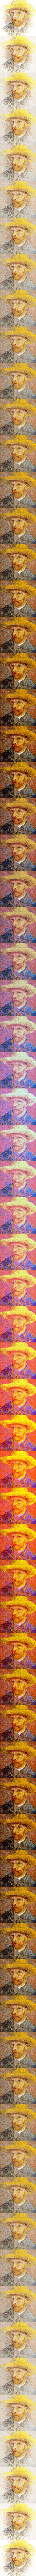 HelloWrld Animated Gif 02 - Van Gogh 1887 Self-Portrait with a Straw Hat